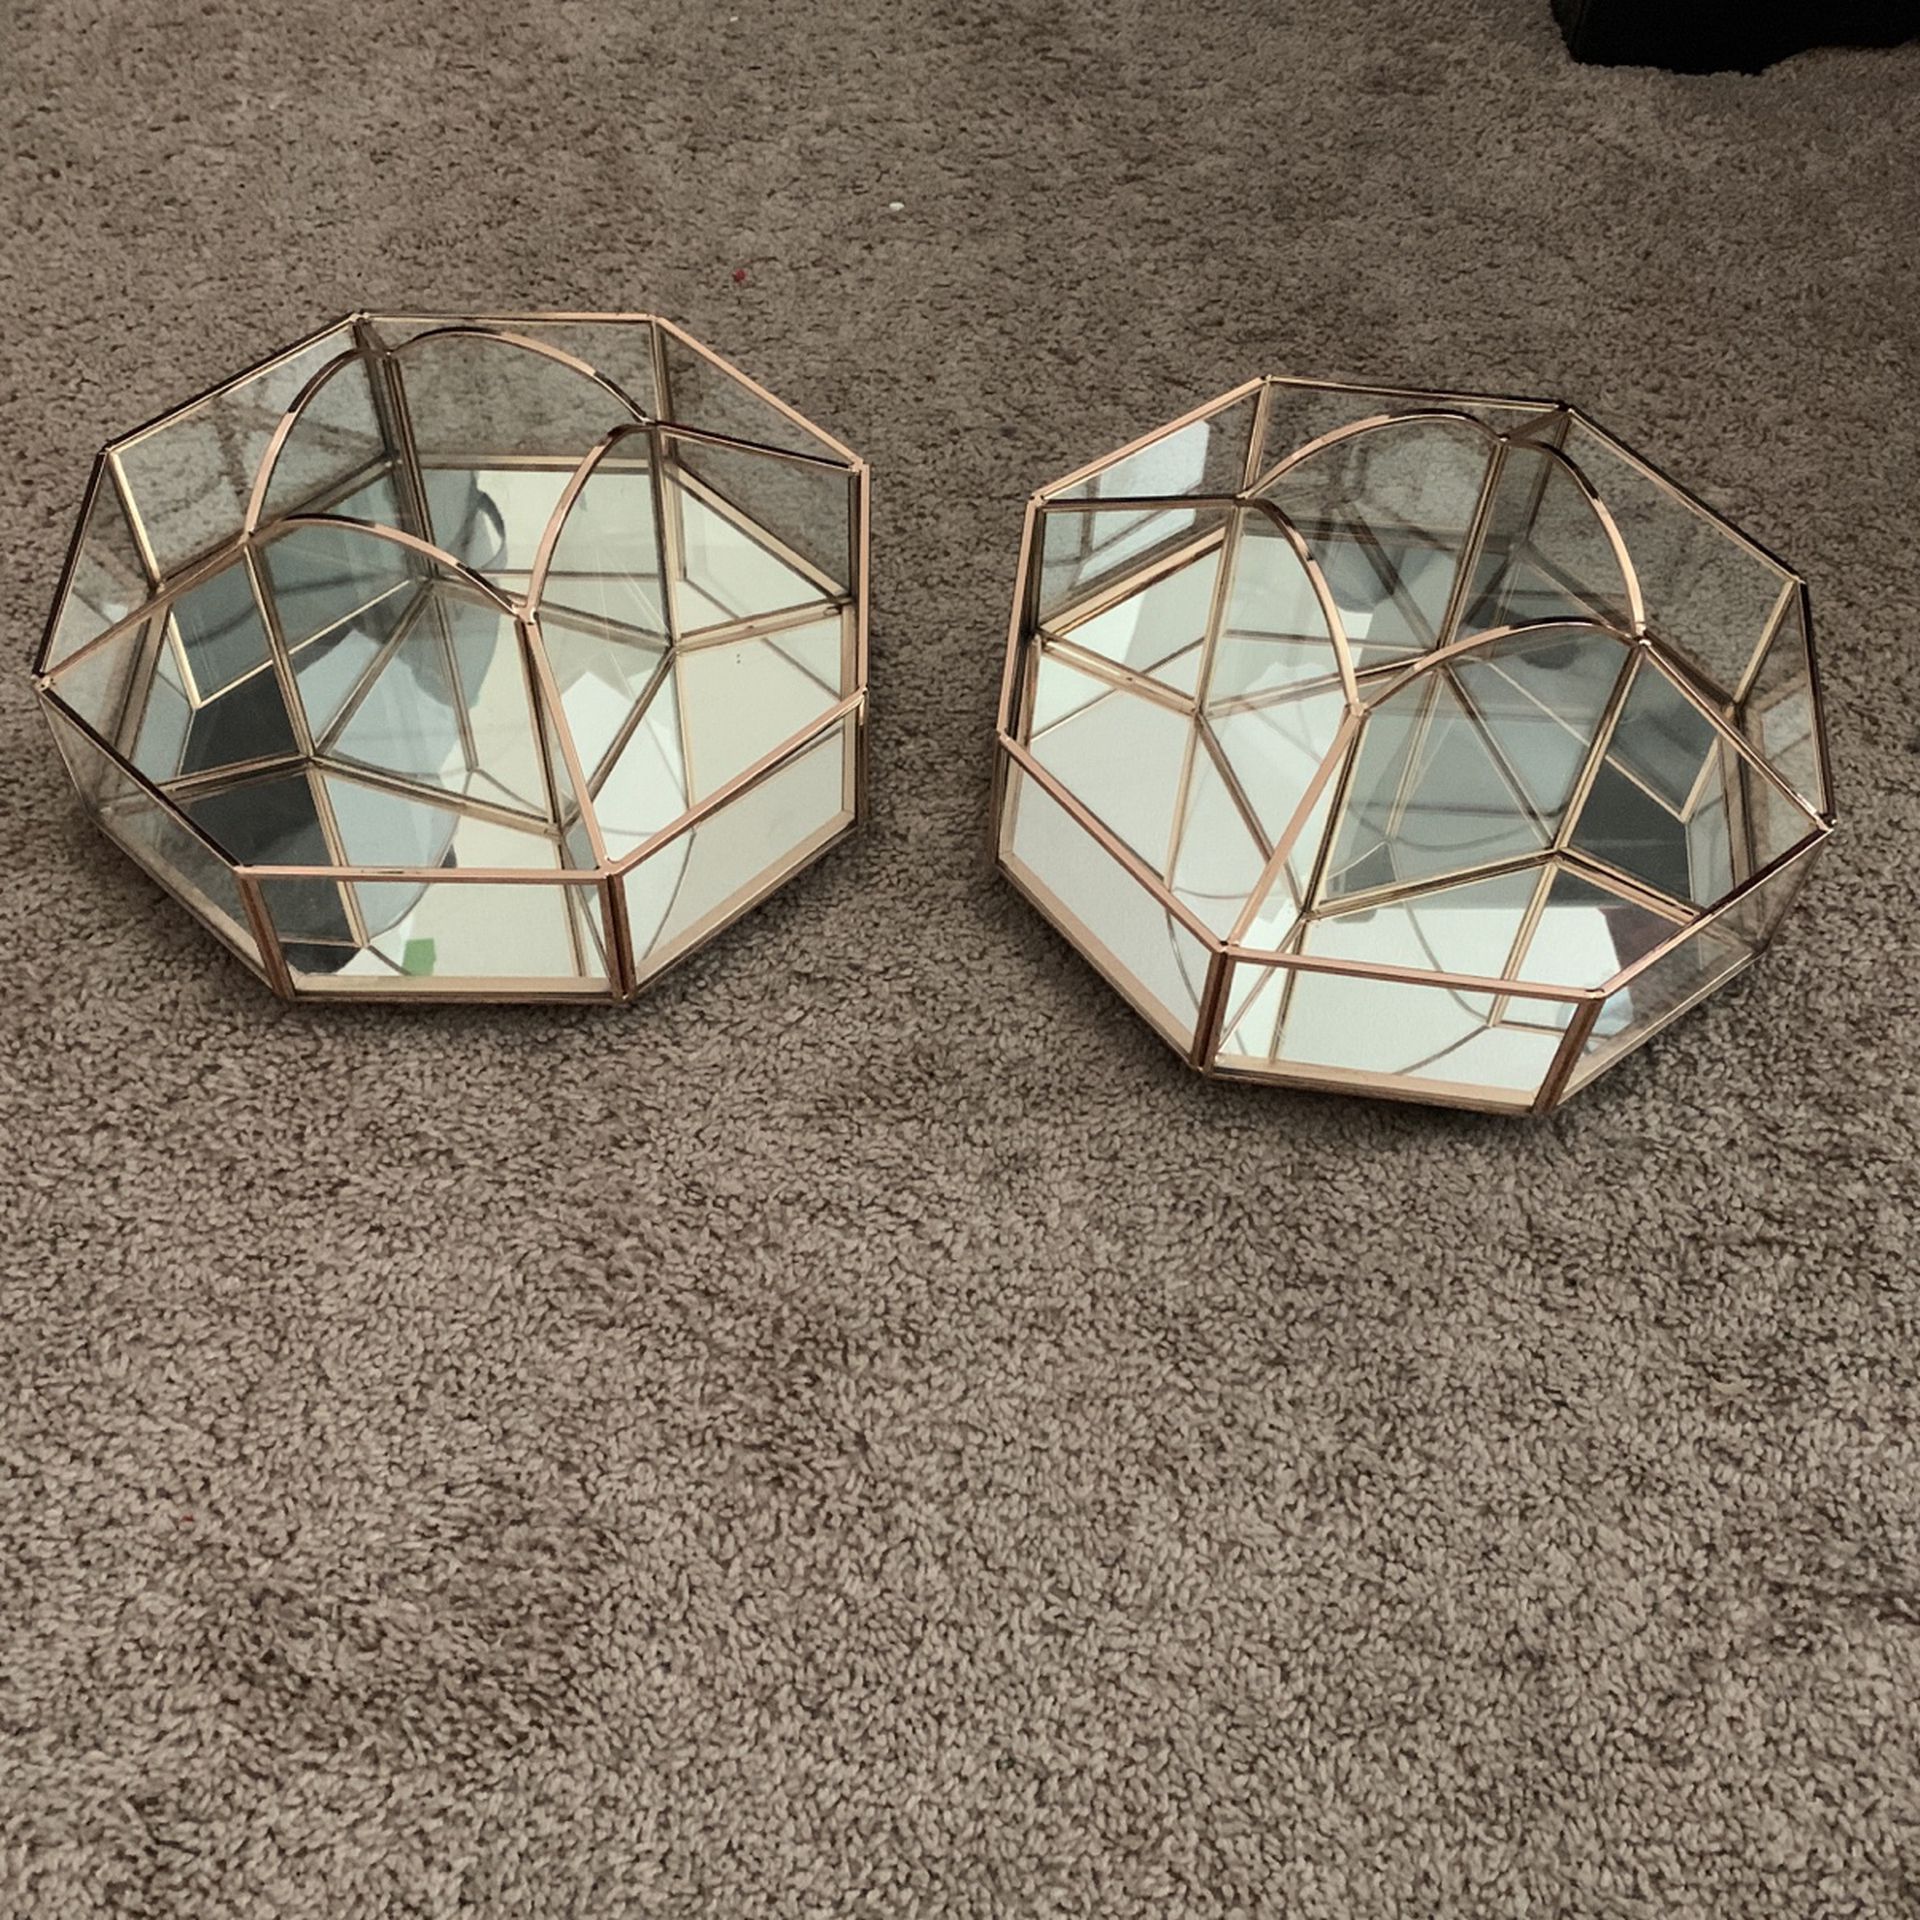 2 -8 Sided Diamond Cases